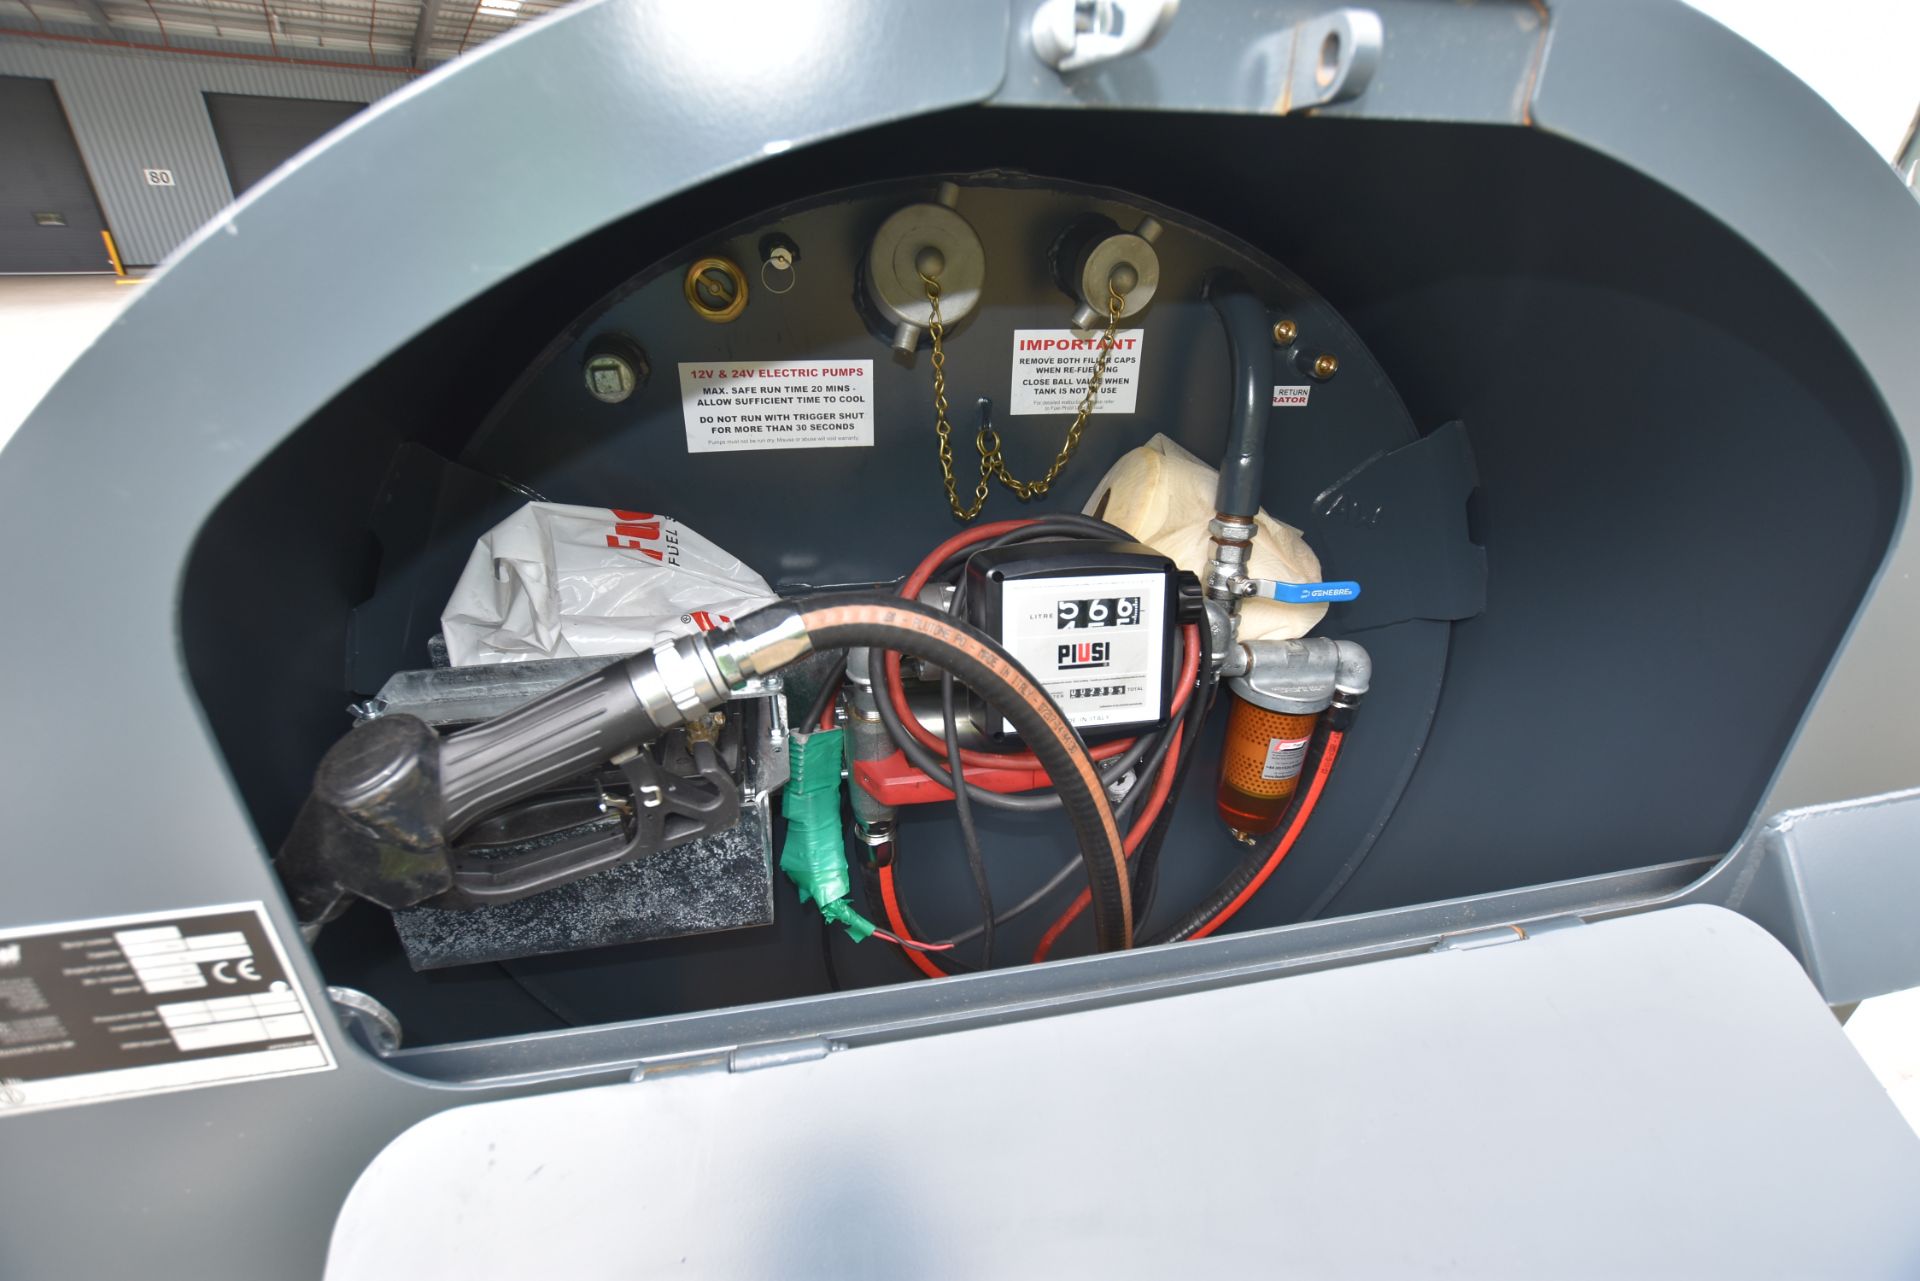 Fuel Proof Fuel Storage Equipment 1000lt Bowser, S - Image 3 of 3